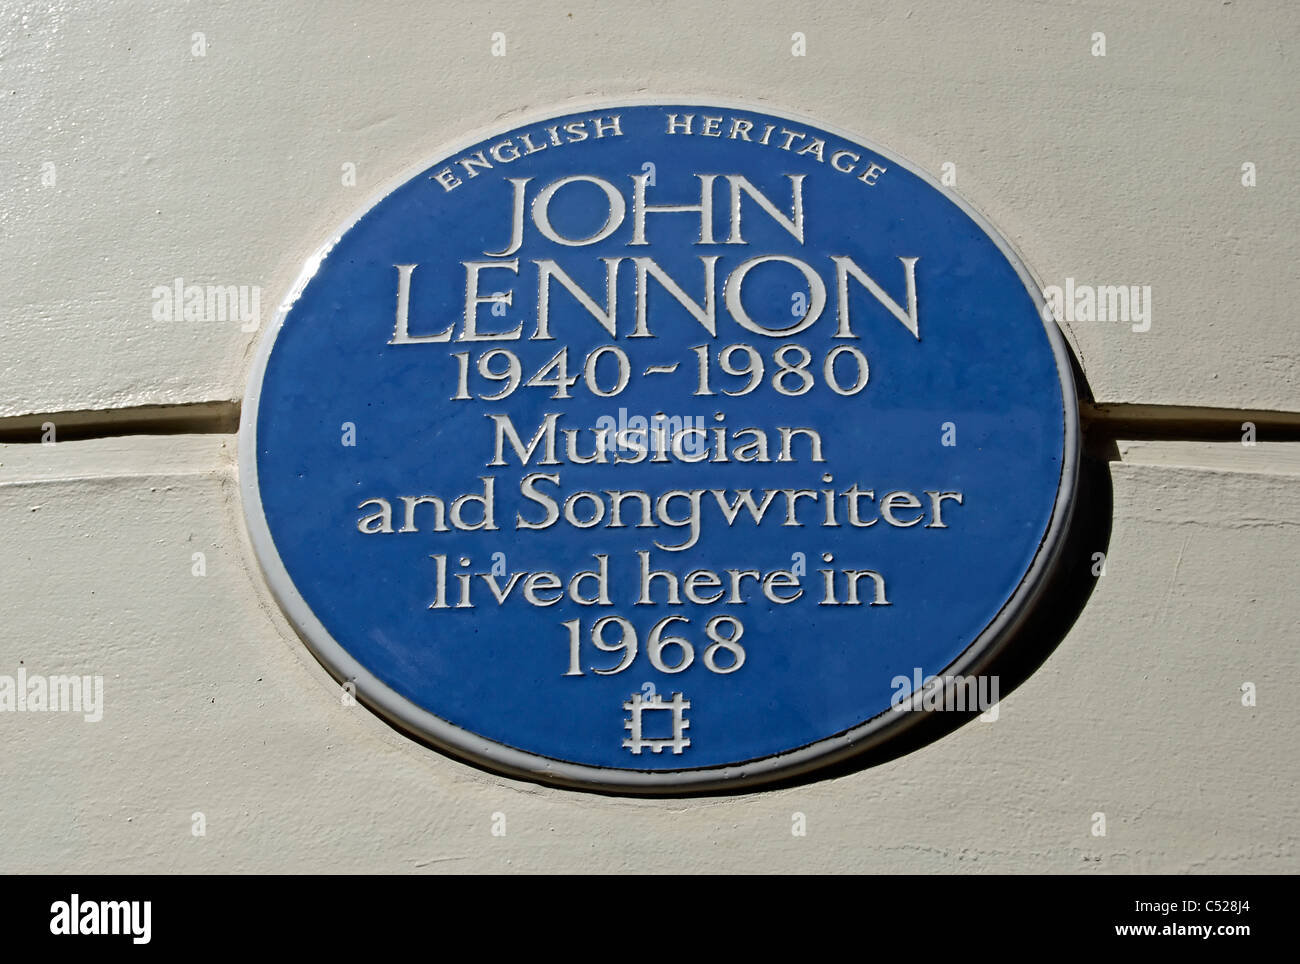 english heritage blue plaque marking a 1968 home of john lennon, marylebone, london, england Stock Photo